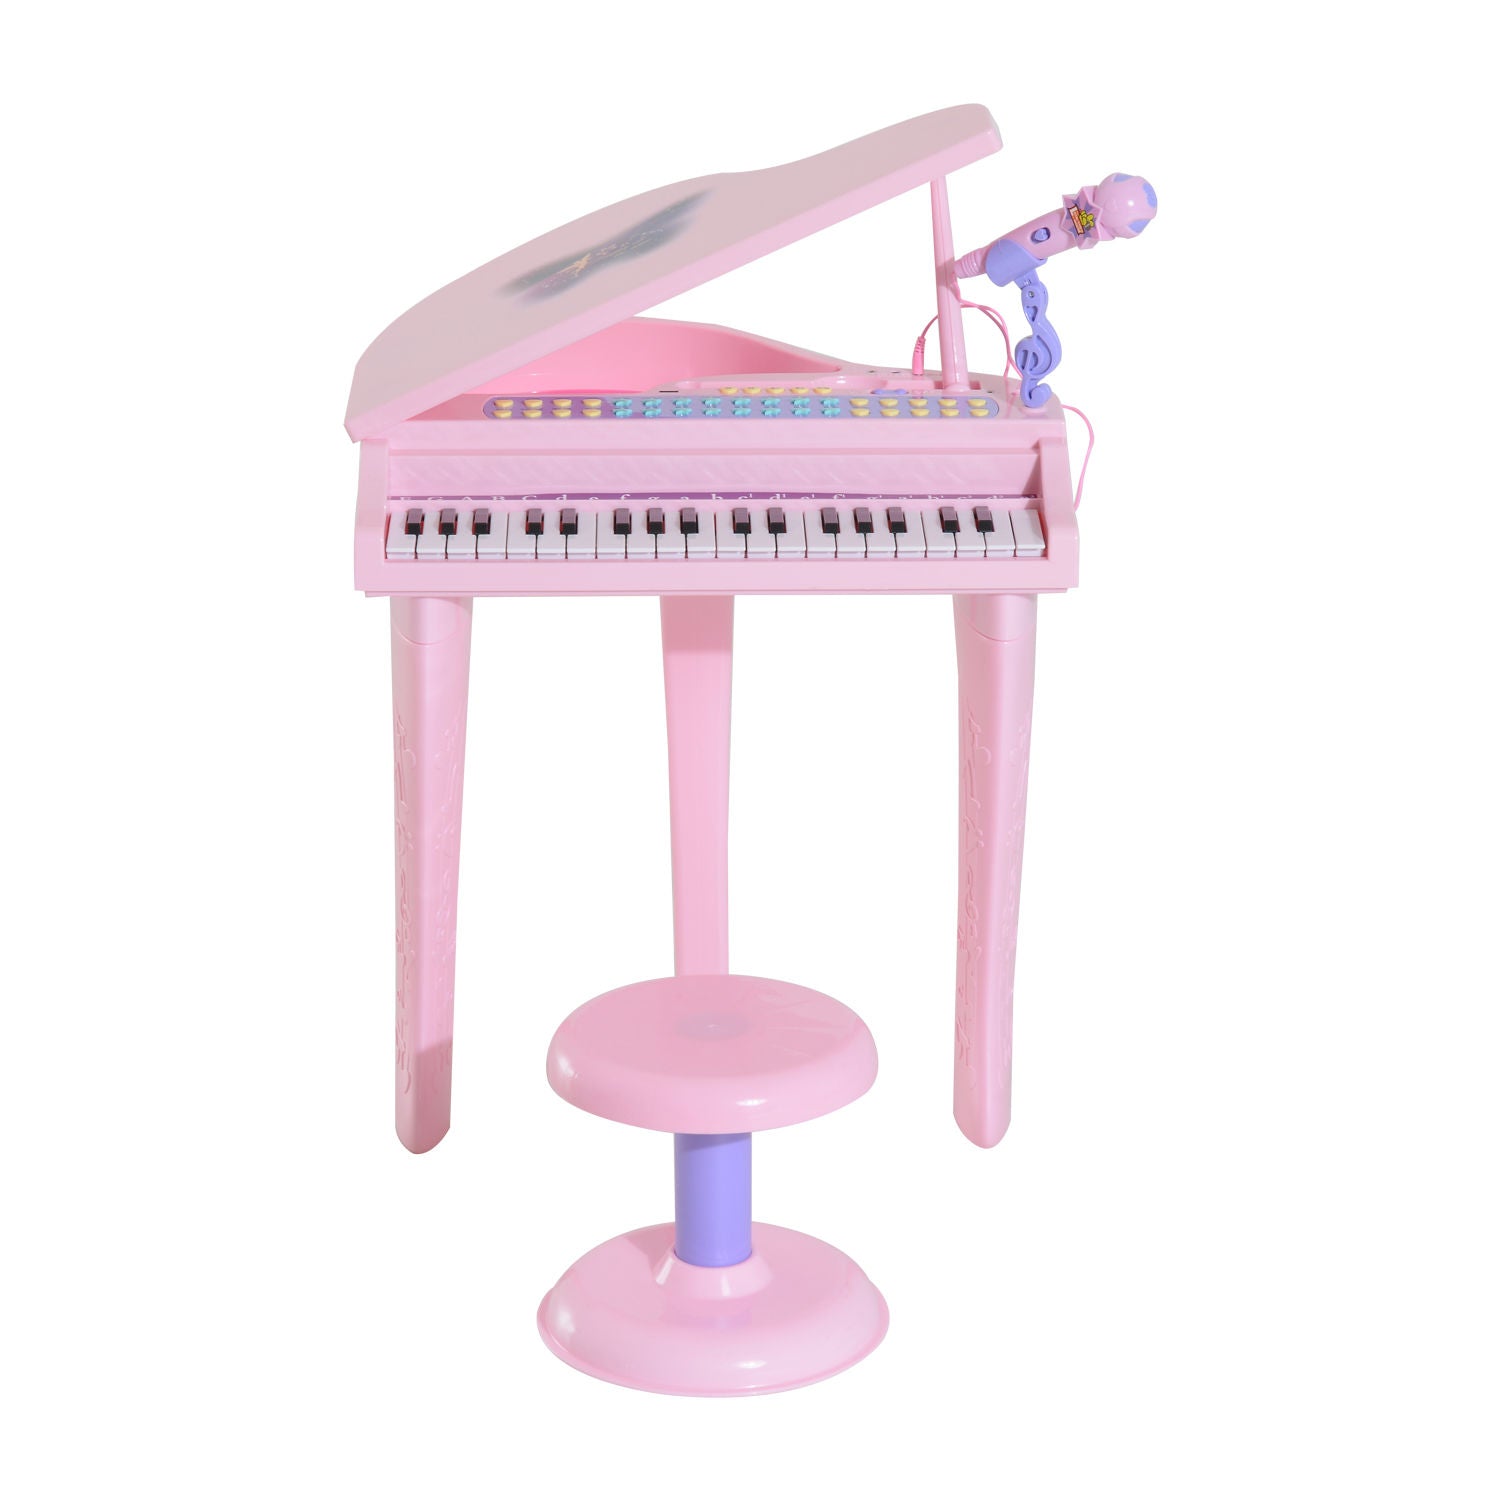 Nancy's Bomba Children's Piano Musical Instrument - Pink - Mini Piano